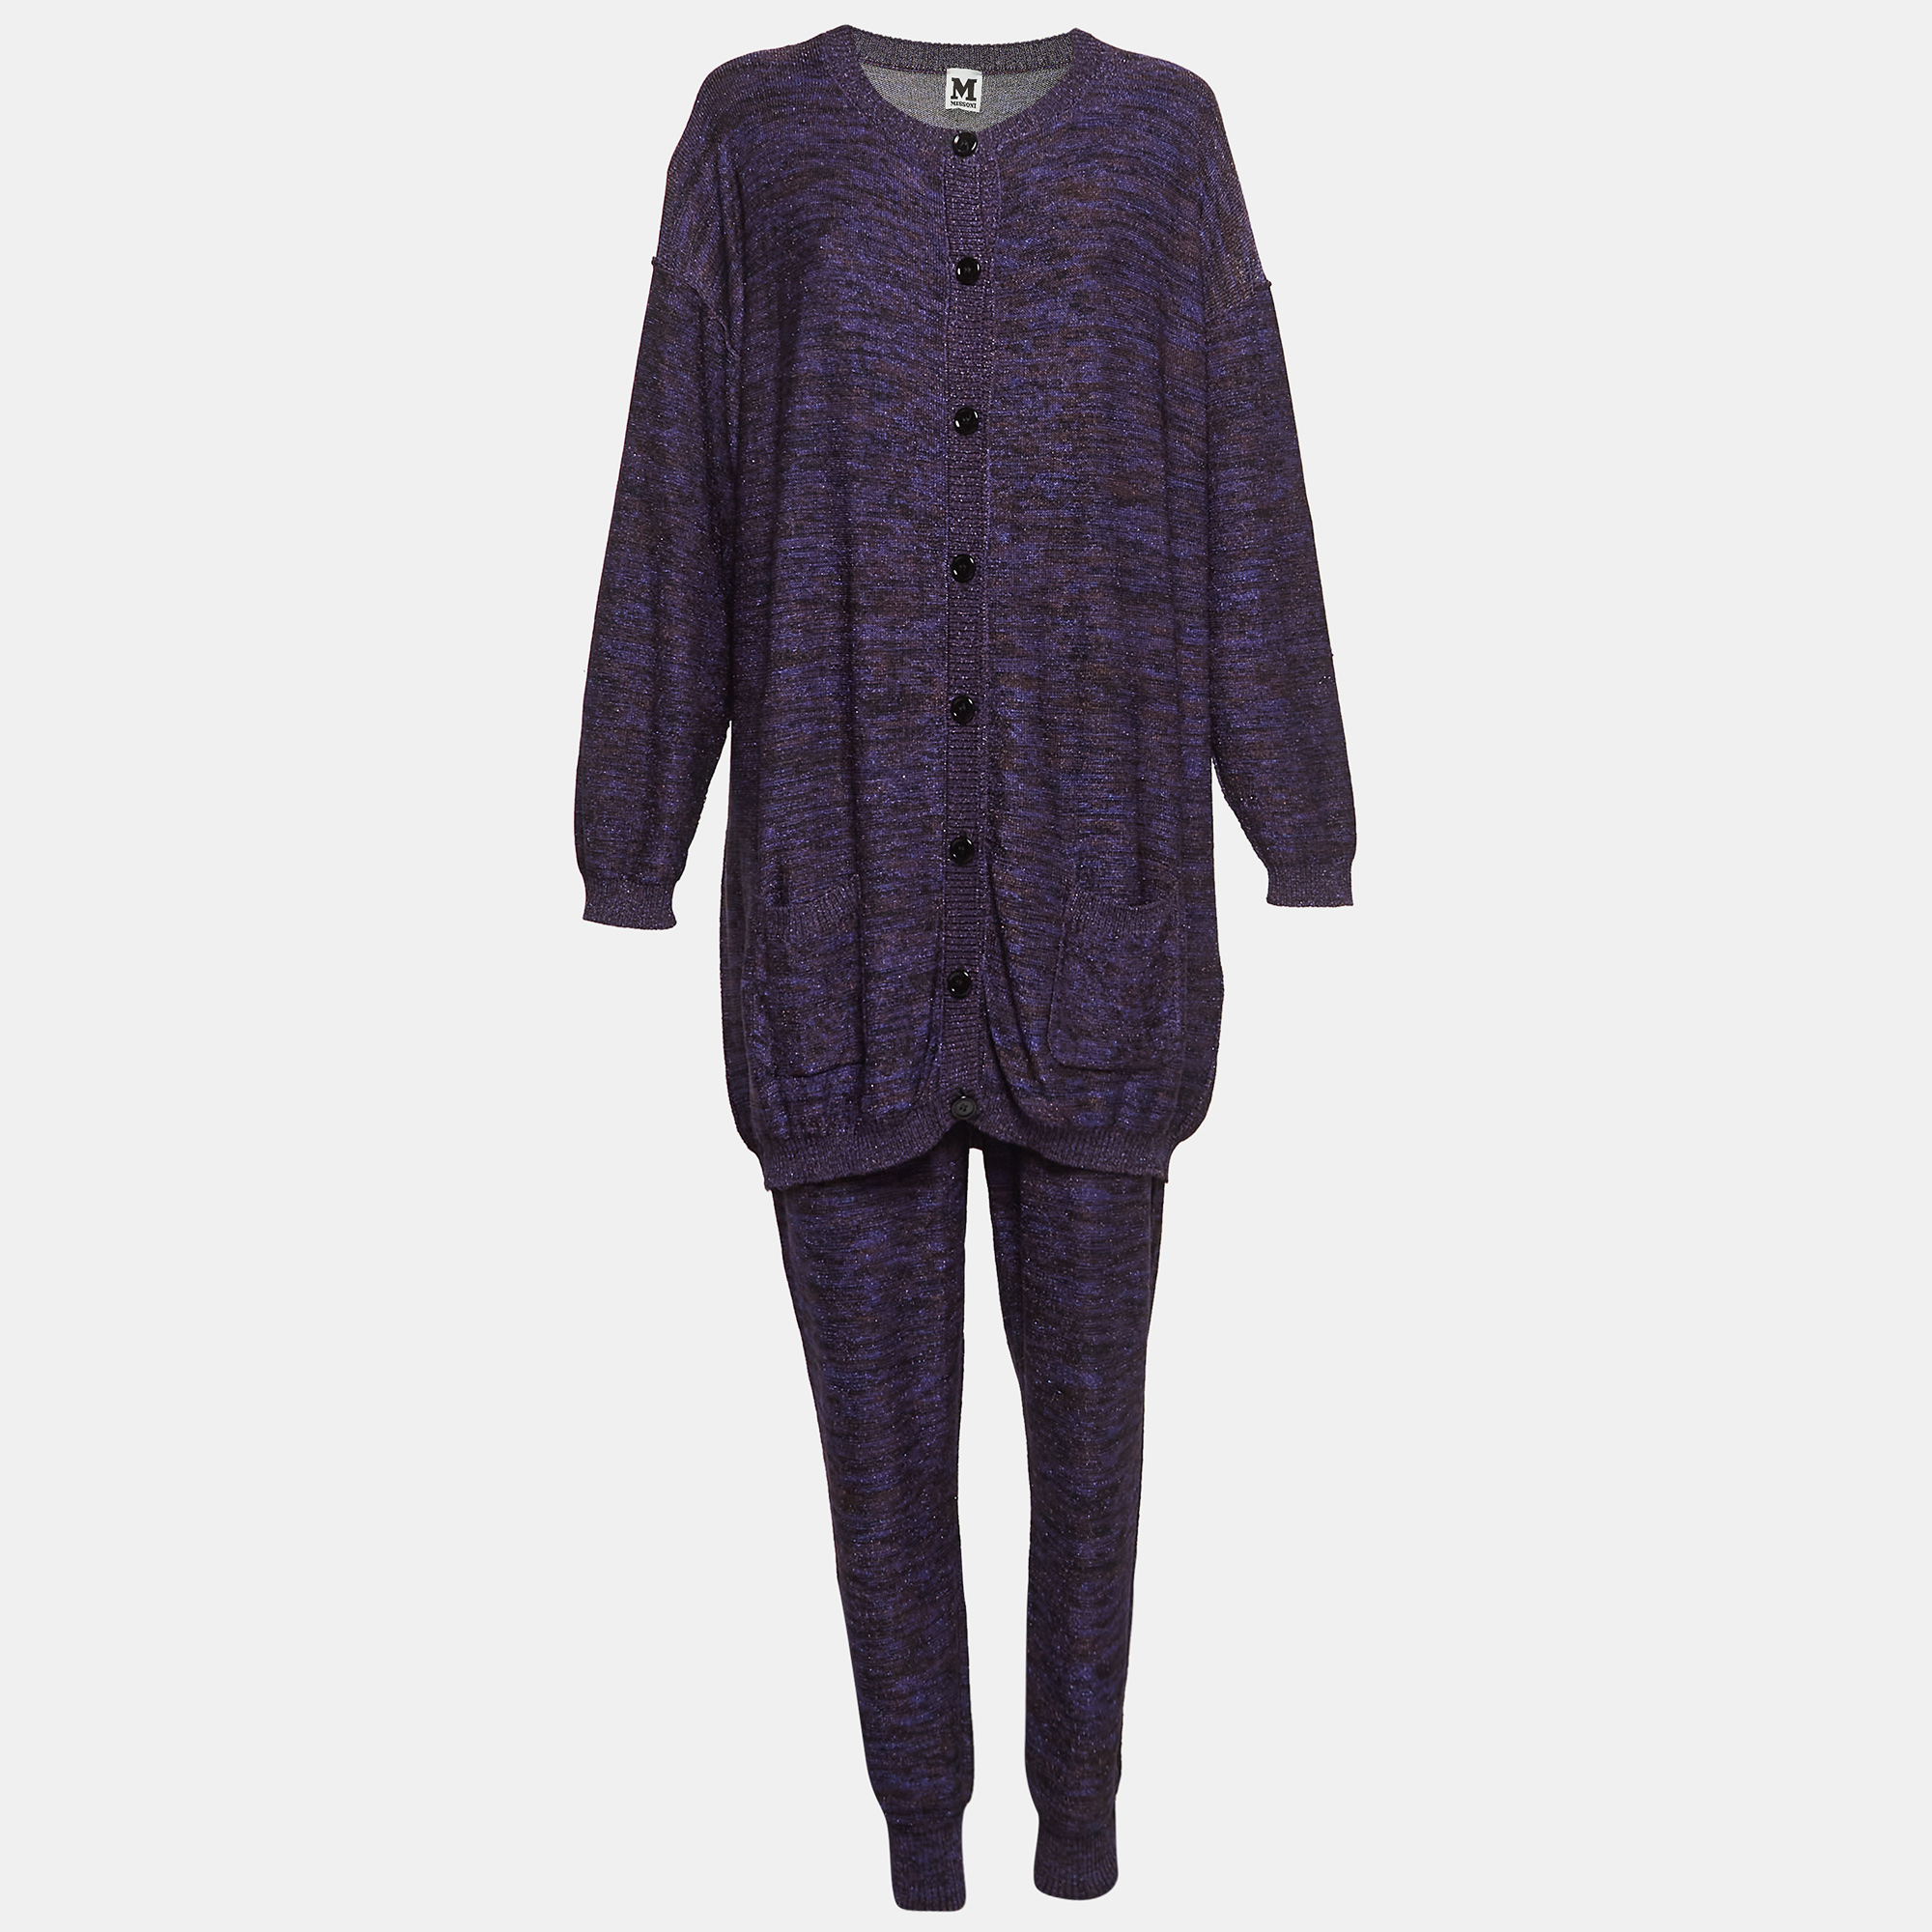 

M Missoni Purple Patterned Lurex Knit Cardigan & Playsuit Set L